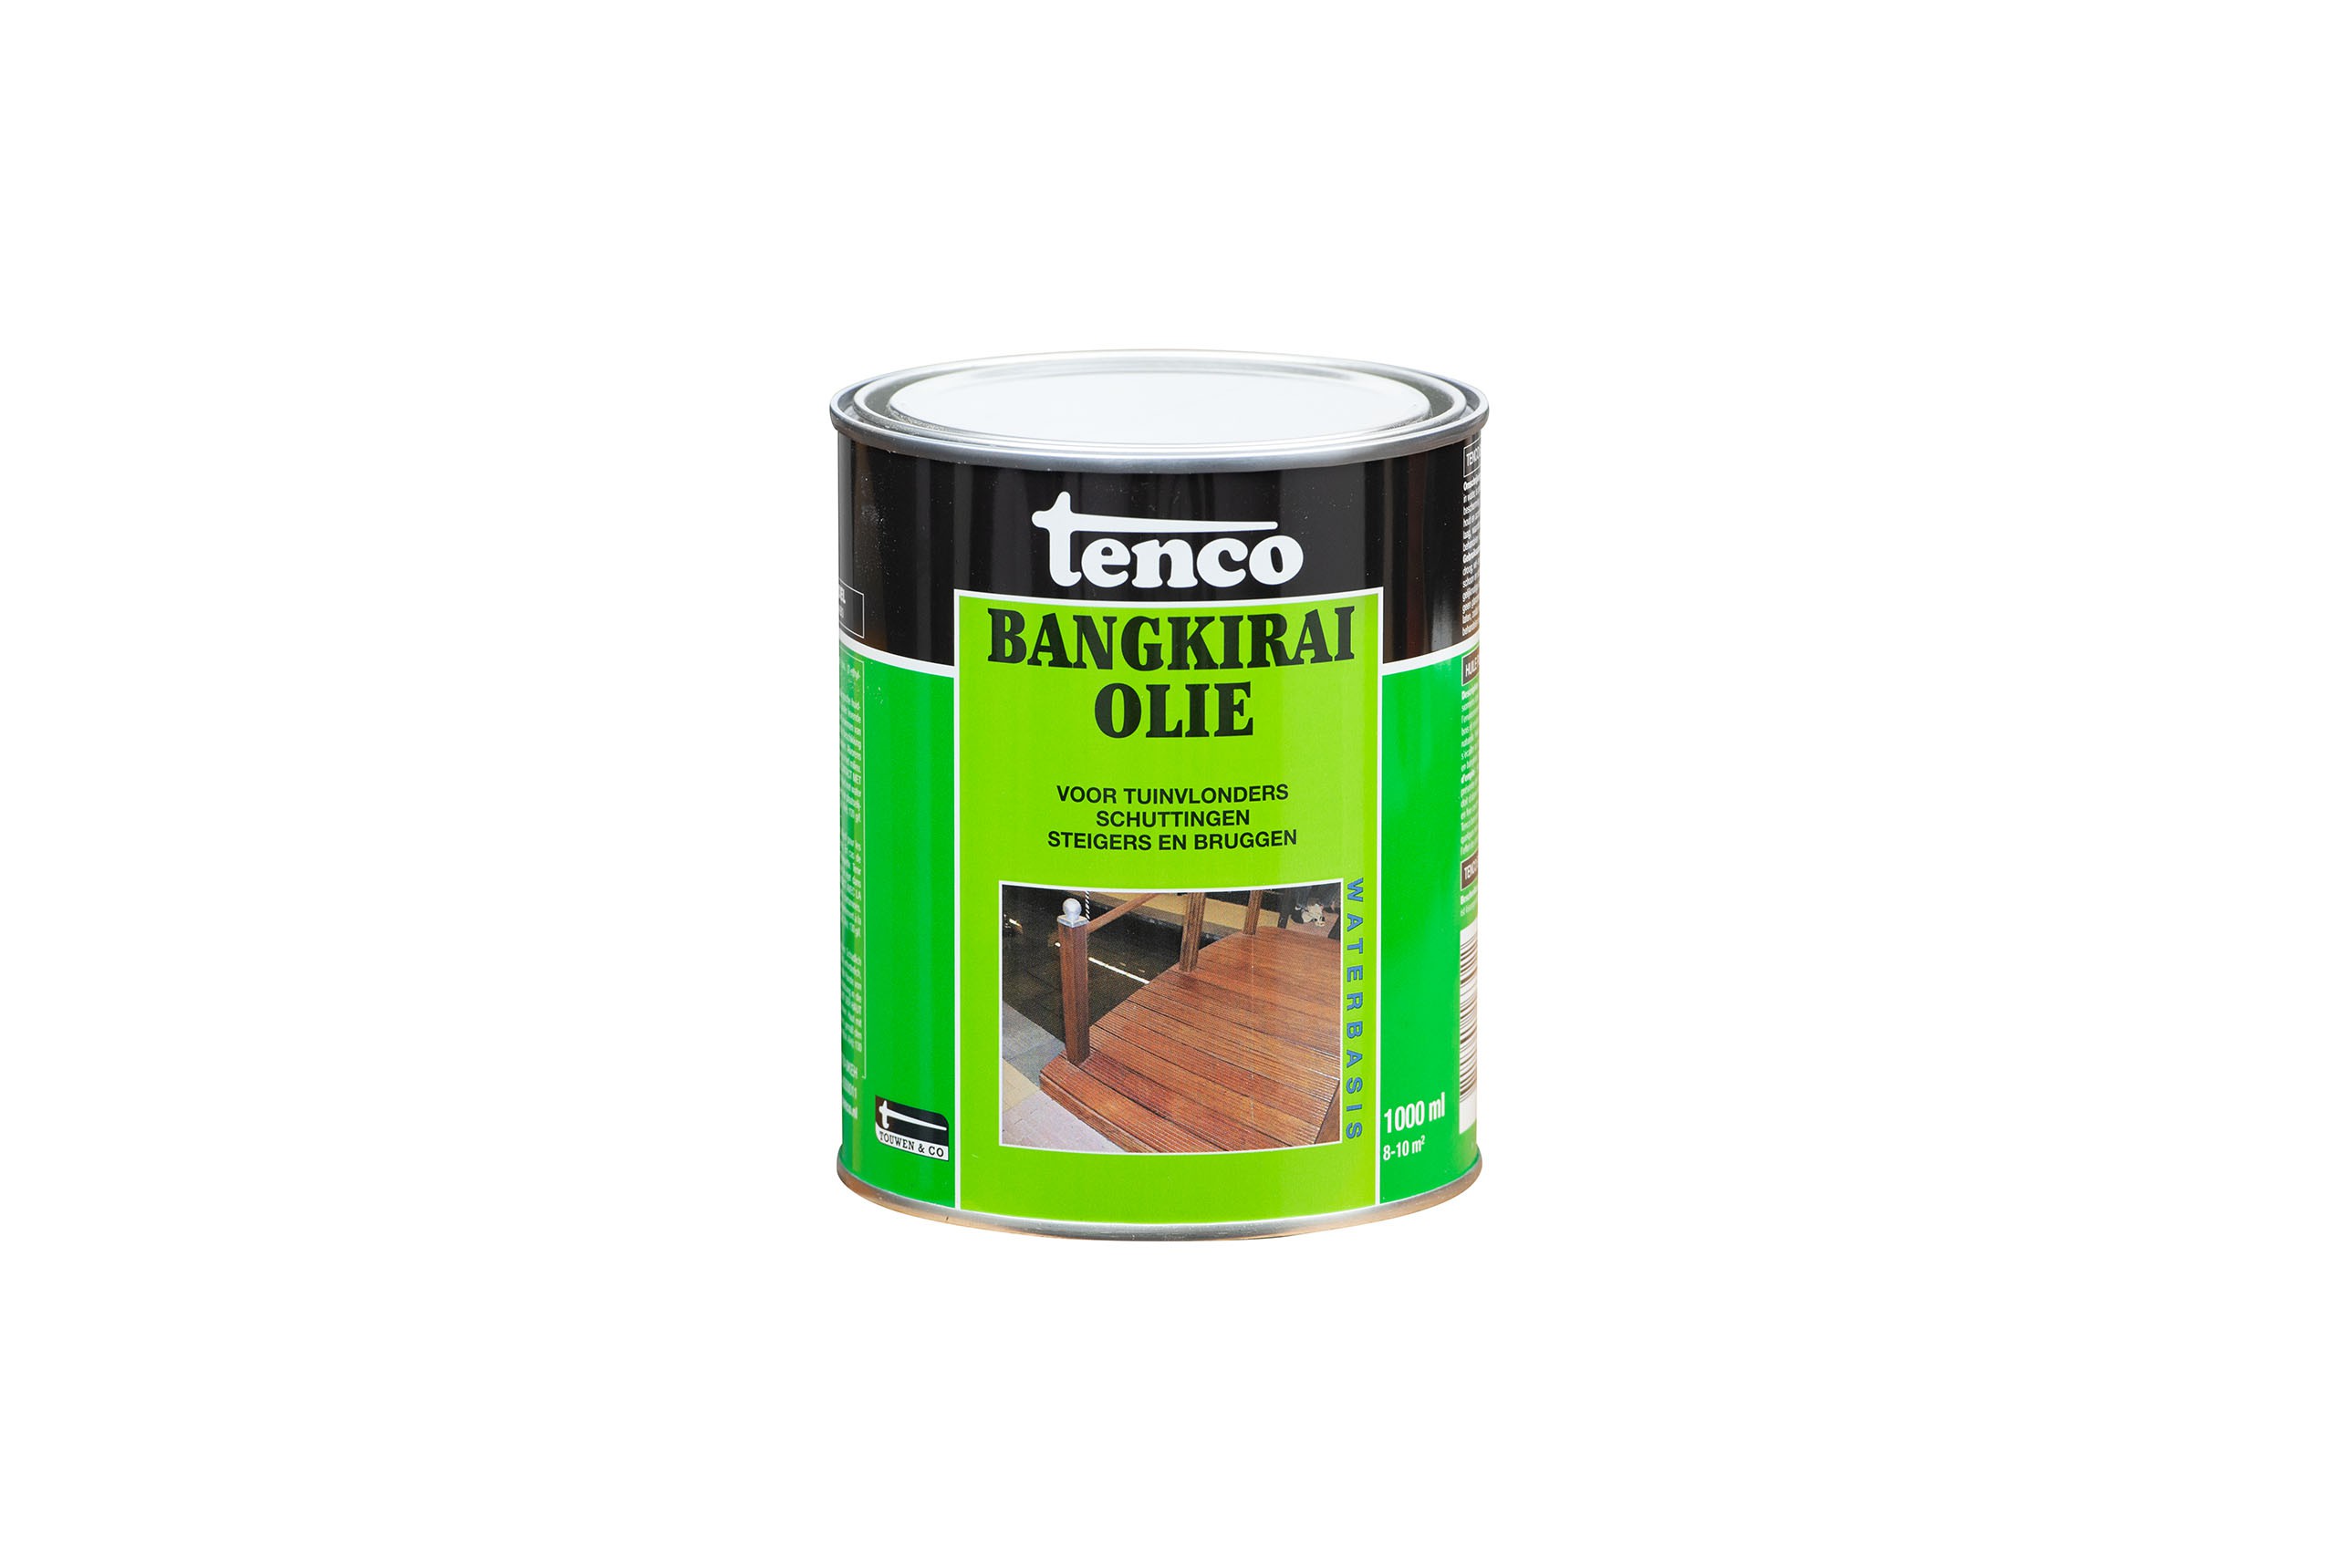 Tenco Bankirai olie 1 liter